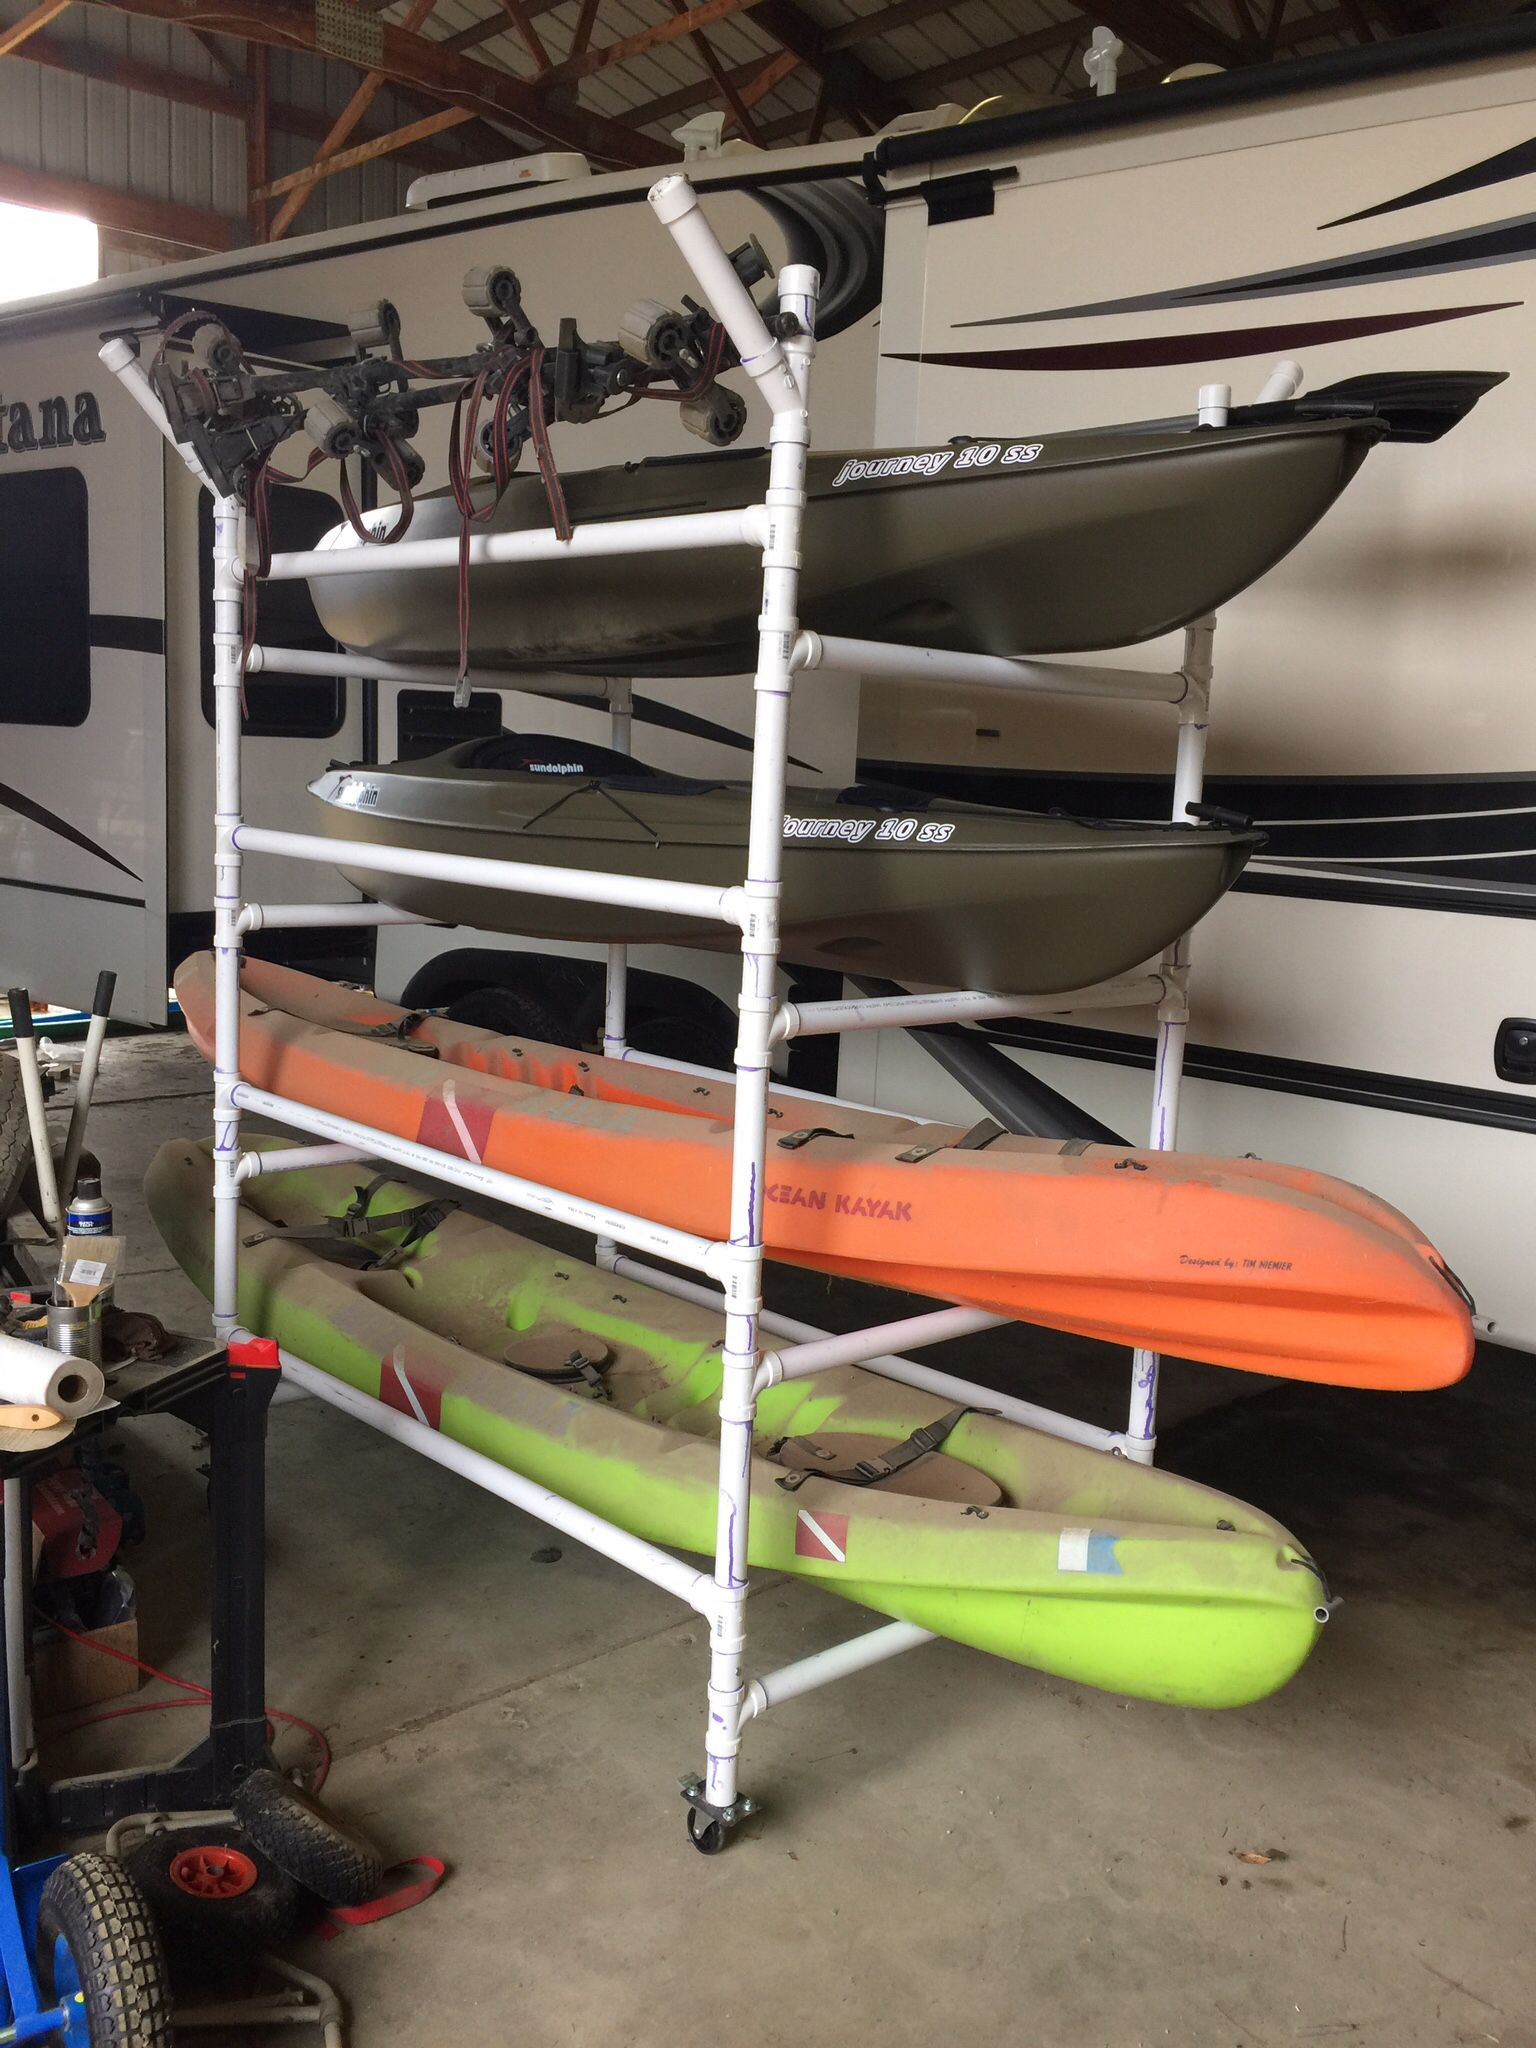 Best ideas about DIY Kayak Car Rack
. Save or Pin Homemade PVC kayak rack can store 4 kayaks paddles Now.